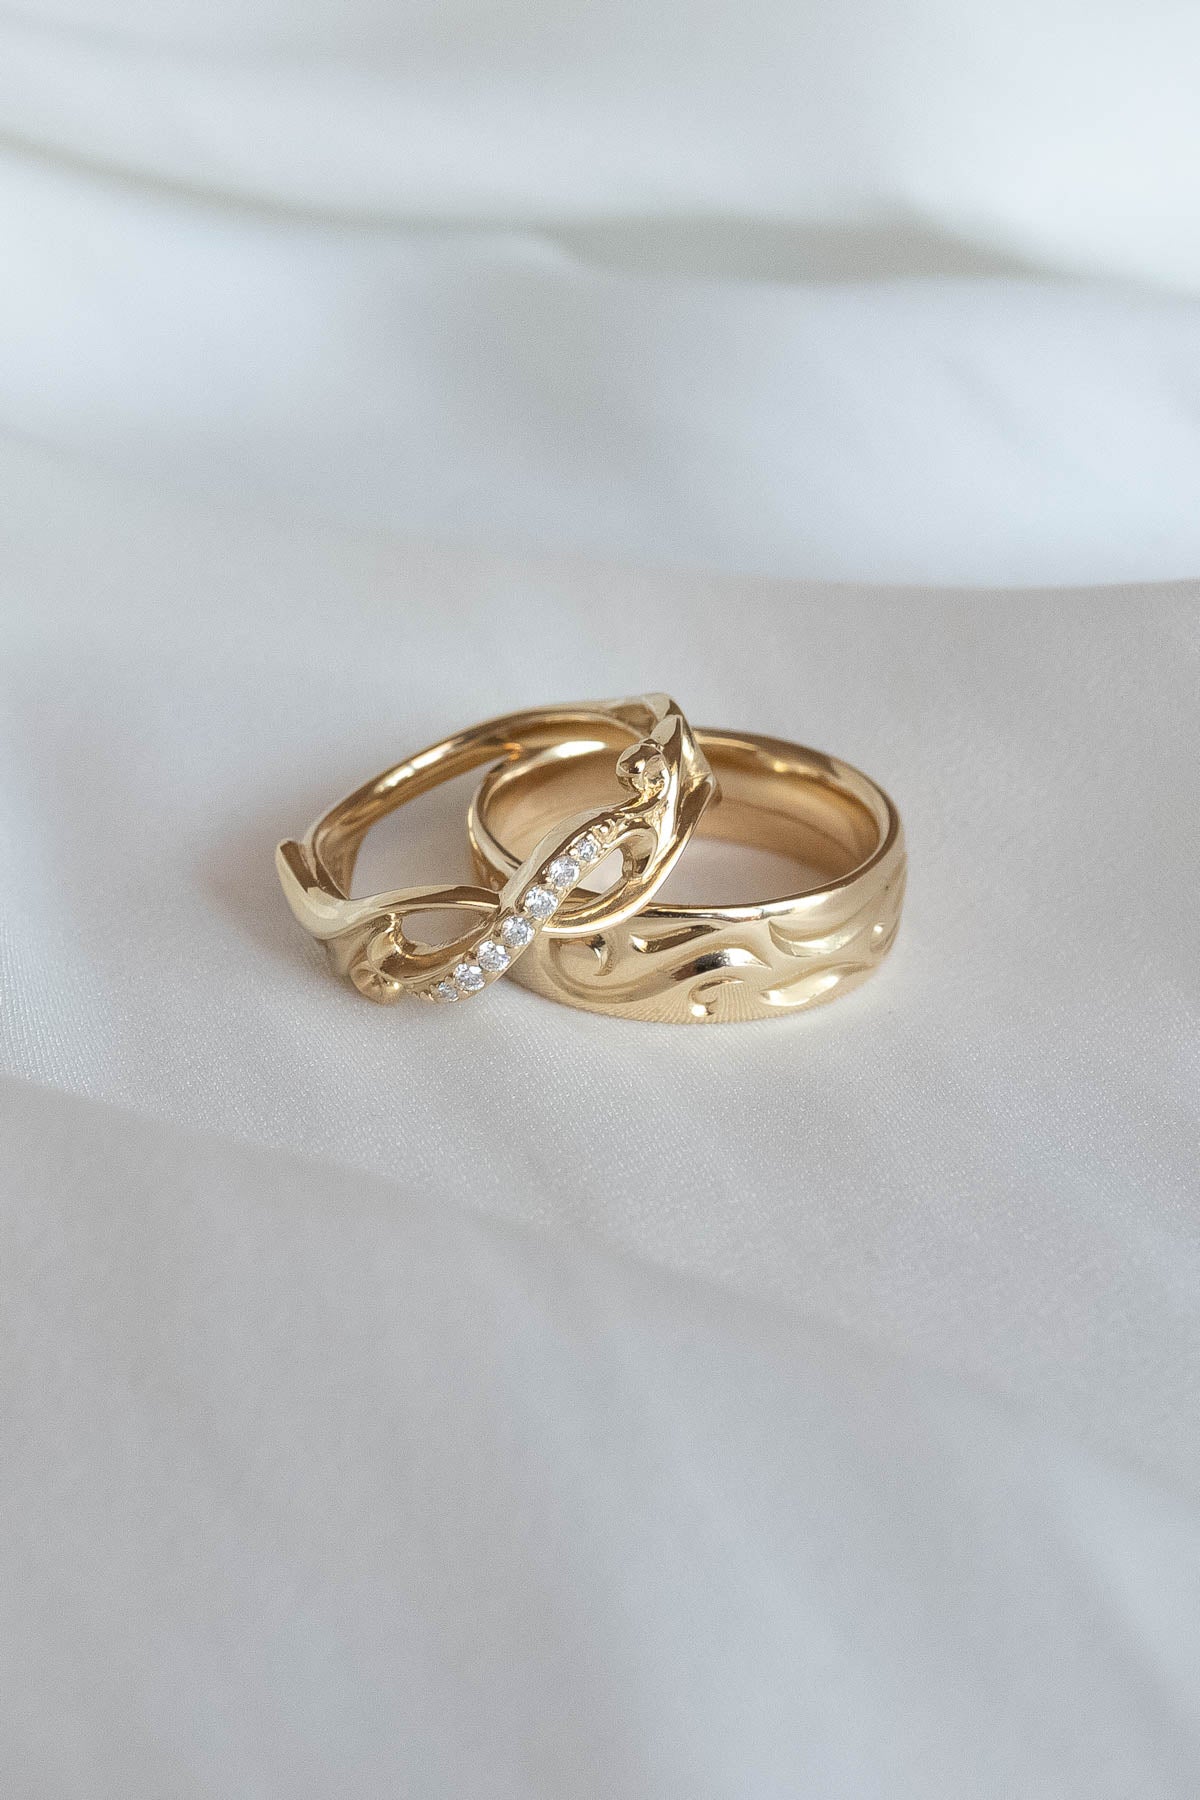 BRAIDED WEDDING RING, INFINITY DIAMOND RING | Braided wedding rings, Wide  diamond bands, Lace ring